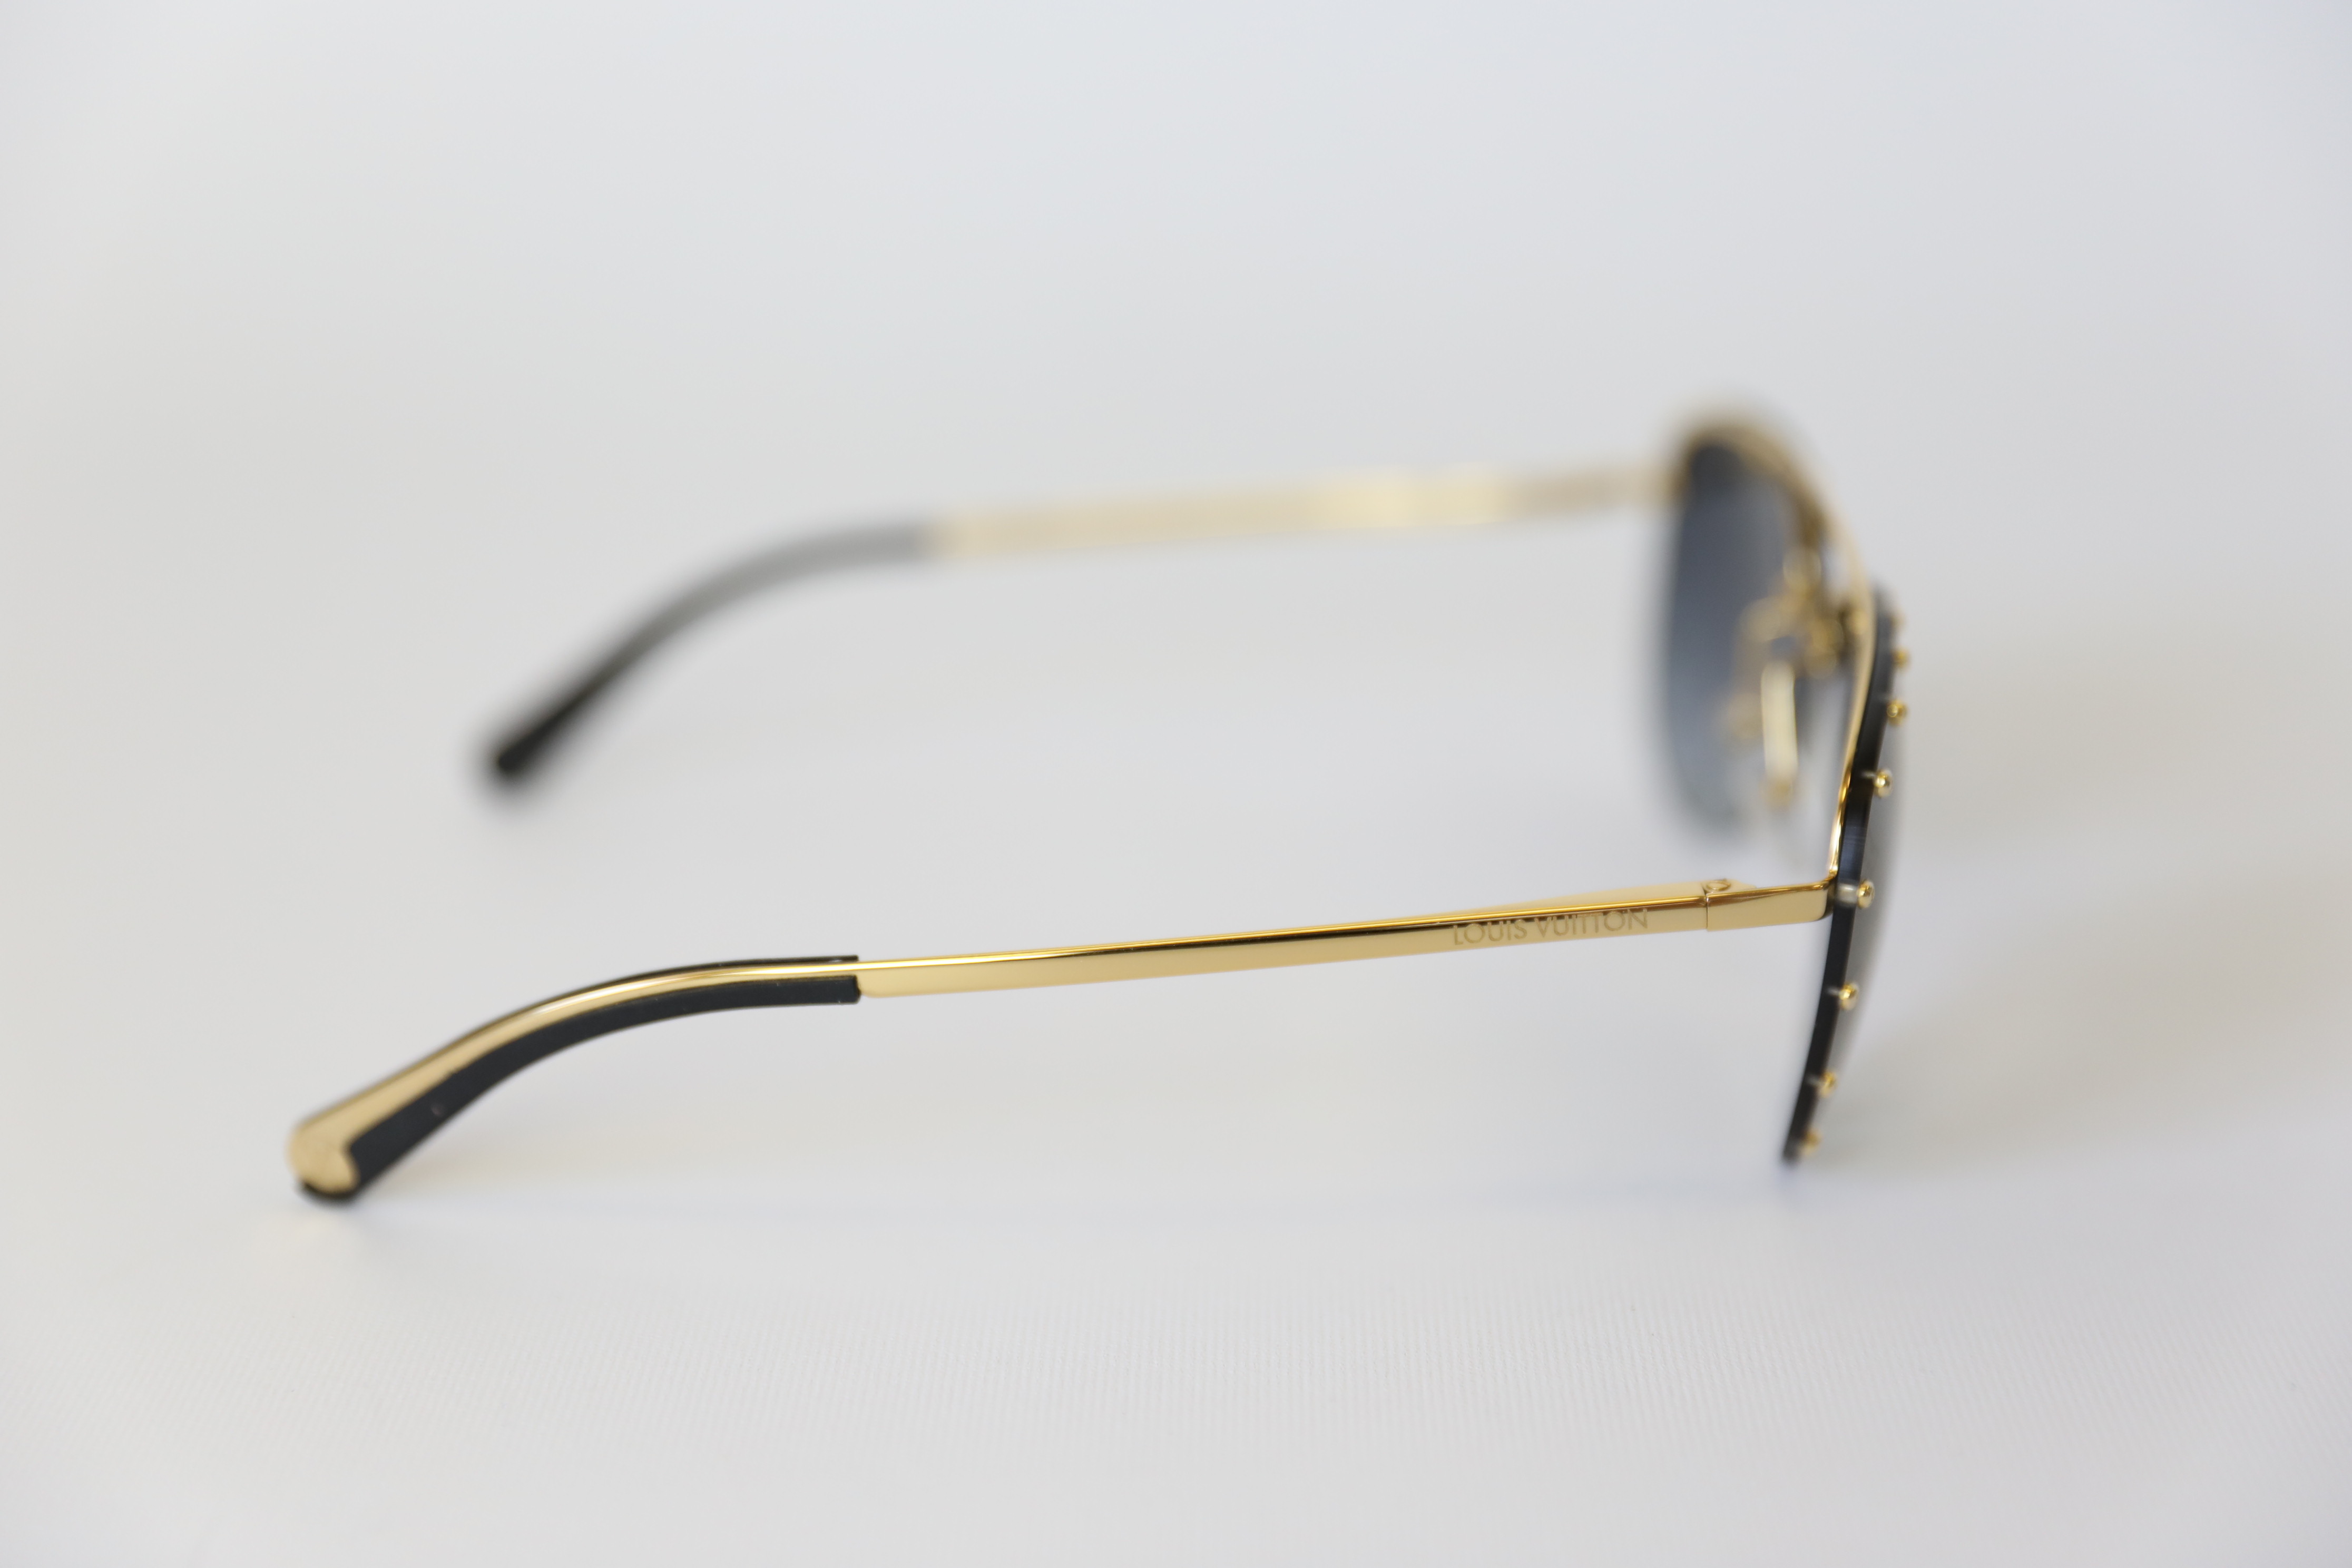 Louis Vuitton The Party Aviator Sunglasses - Ann's Fabulous Closeouts